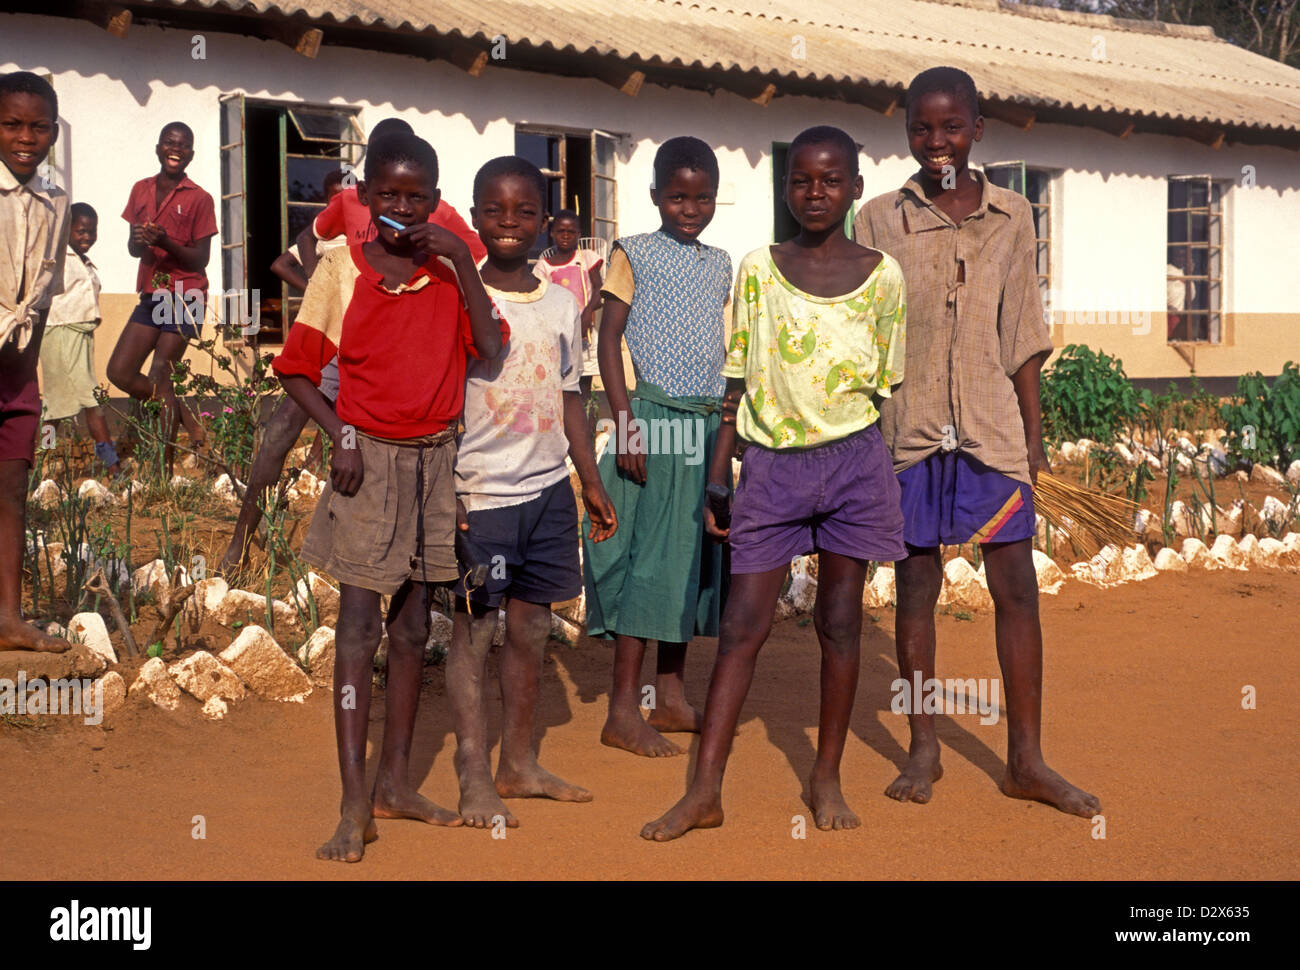 Zimbabwean boys young boys, boys, children, schoolchildren, schoolboys, village of Mahenye, Manicaland Province, Zimbabwe, Africa Stock Photo